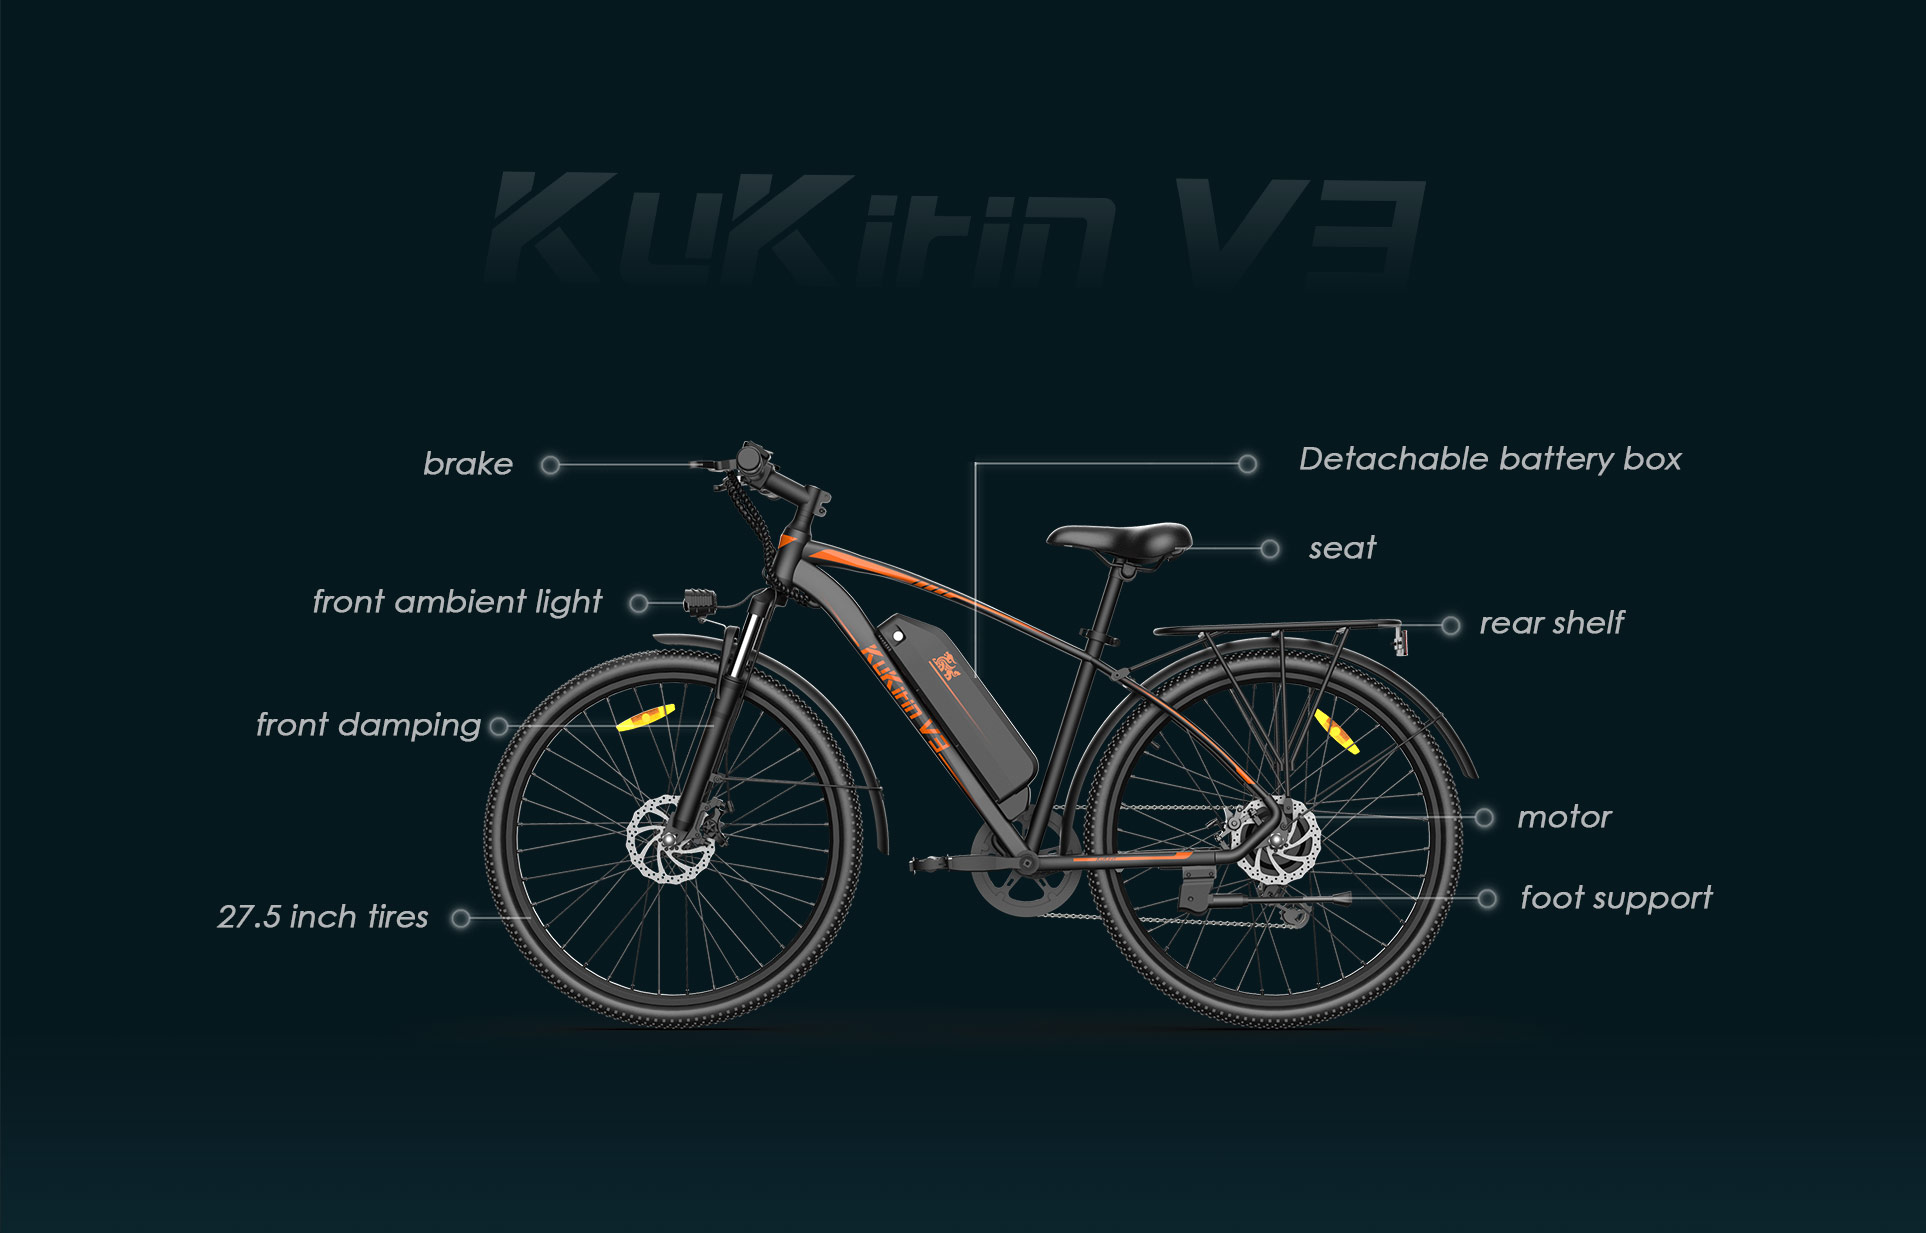 KuKirin V3 Elektro-Mountainbike, 27,5 Zoll Reifen, austauschbarer 15Ah Akku, 90 km maximale Reichweite, 40 km/h